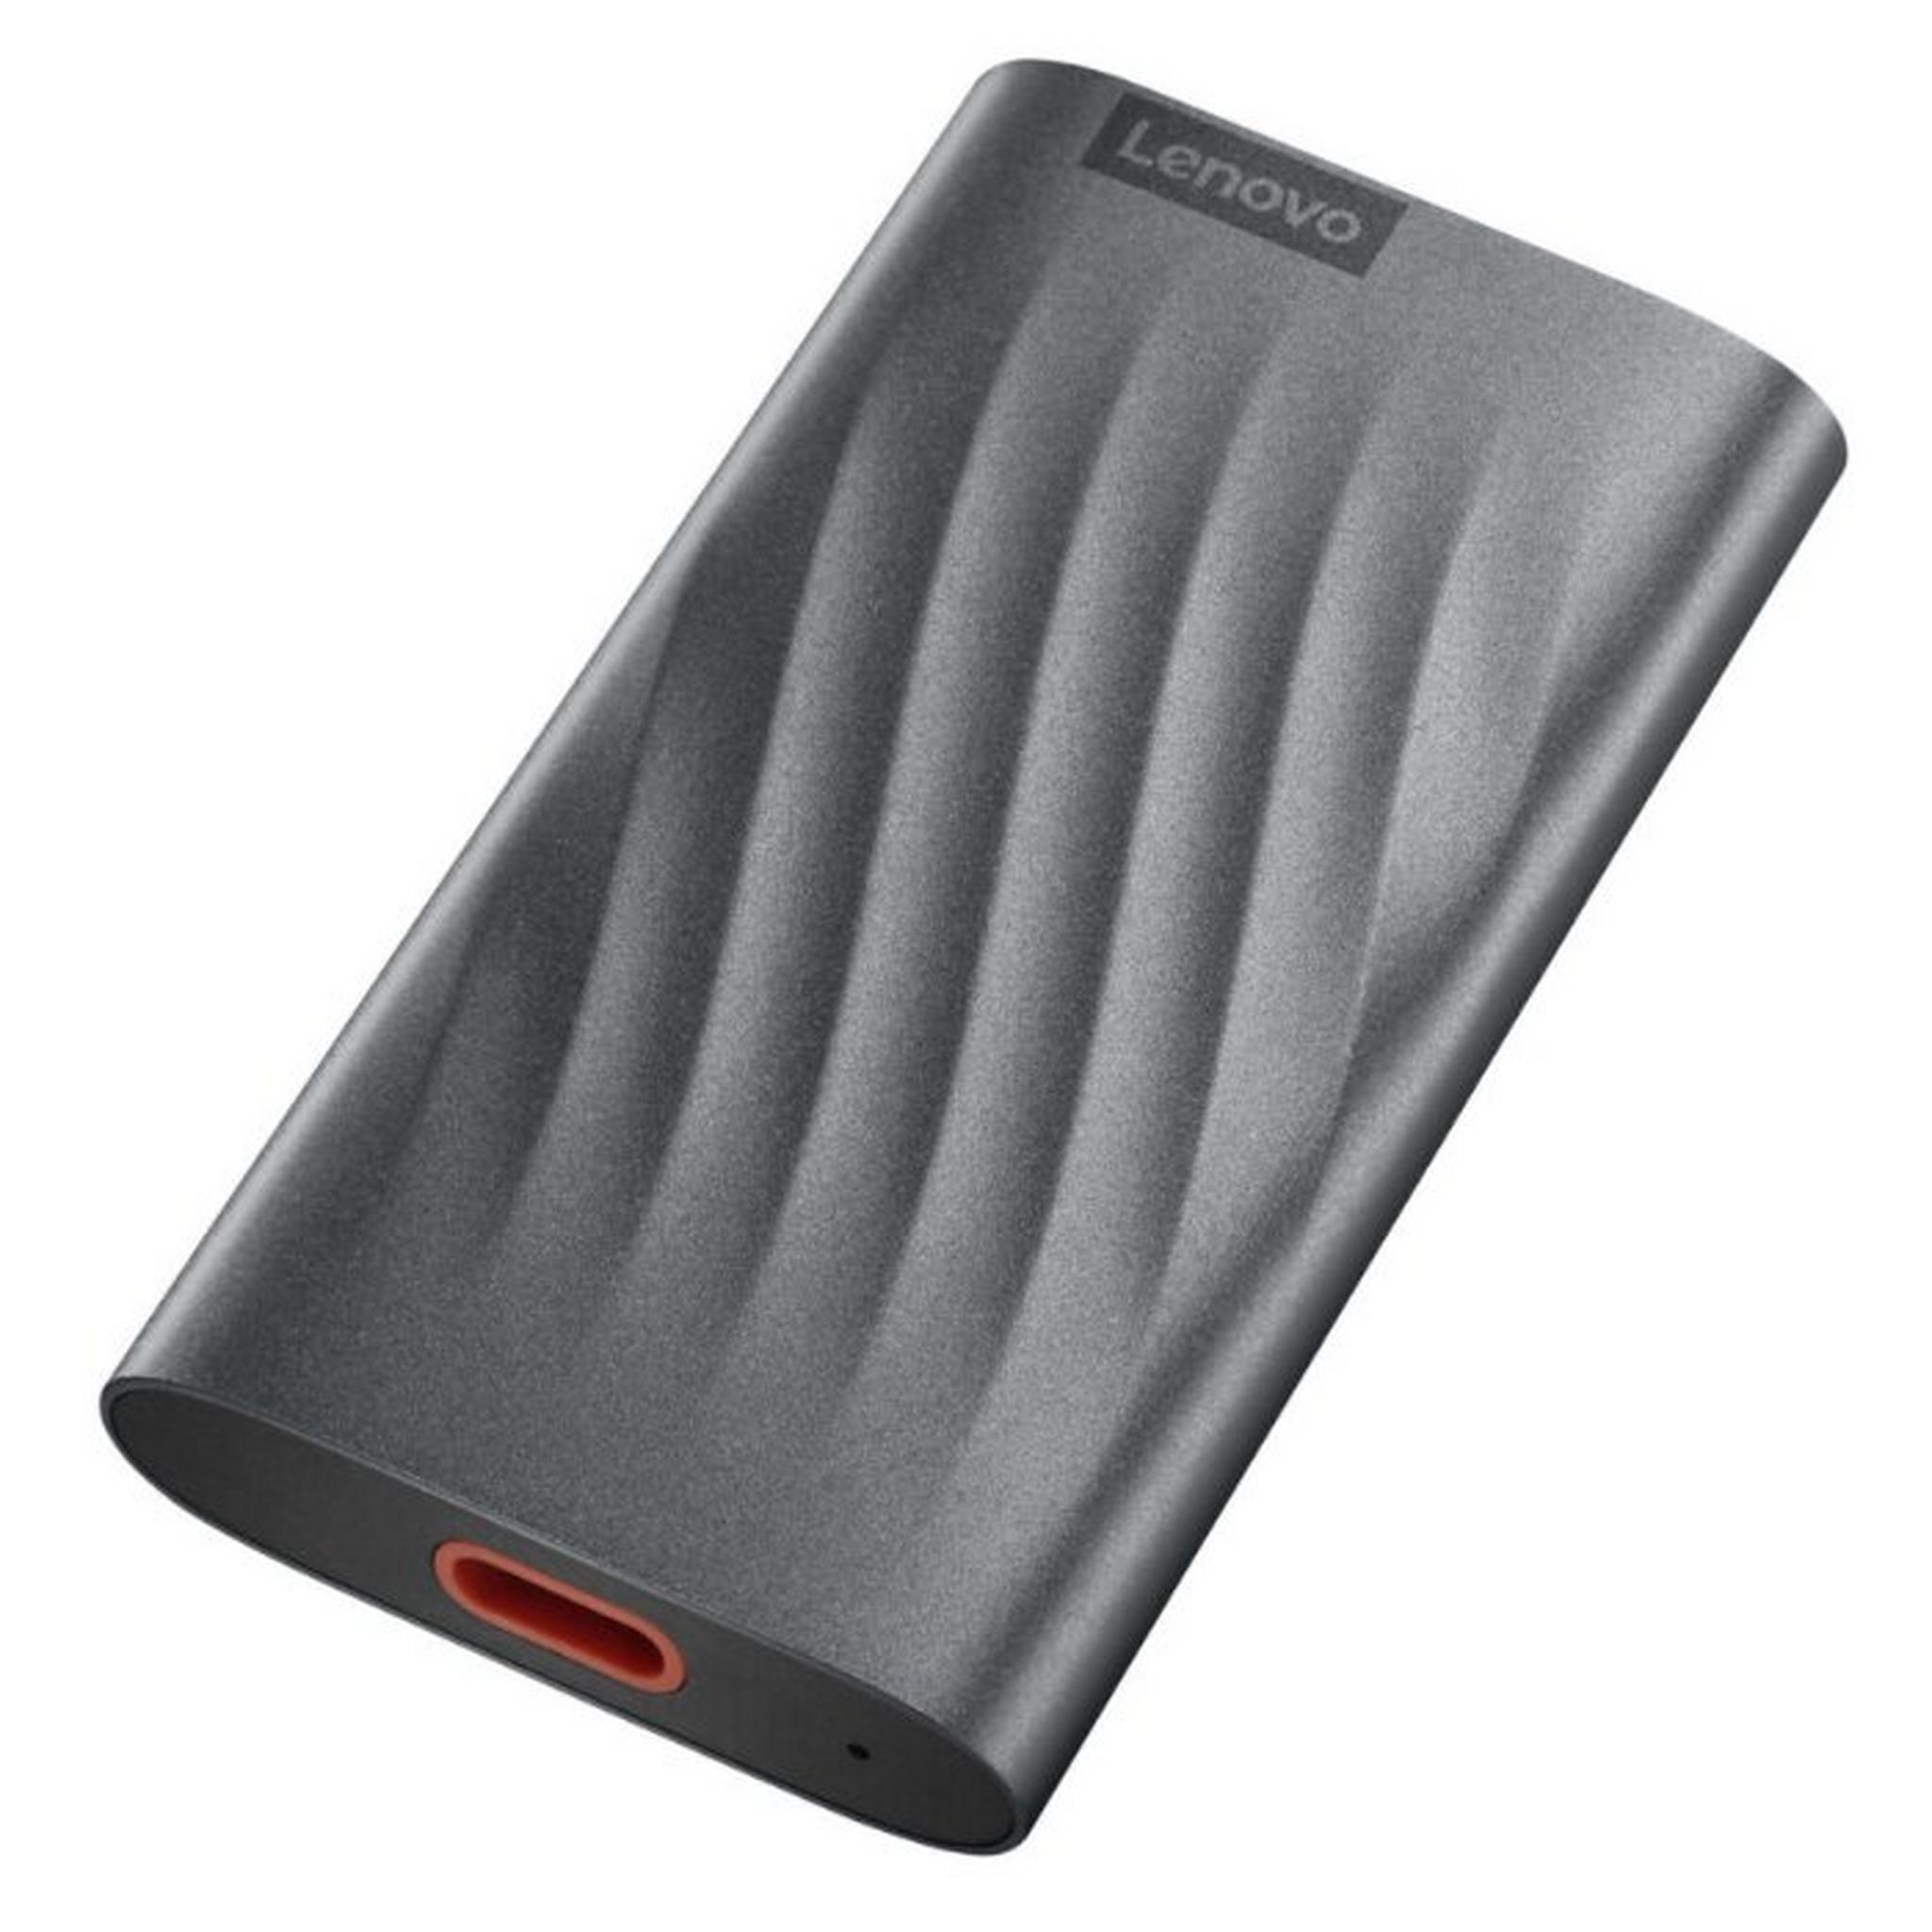 Lenovo PS6 Portable Hard Drive, 2TB SSD, GXB1M24165 – Silver